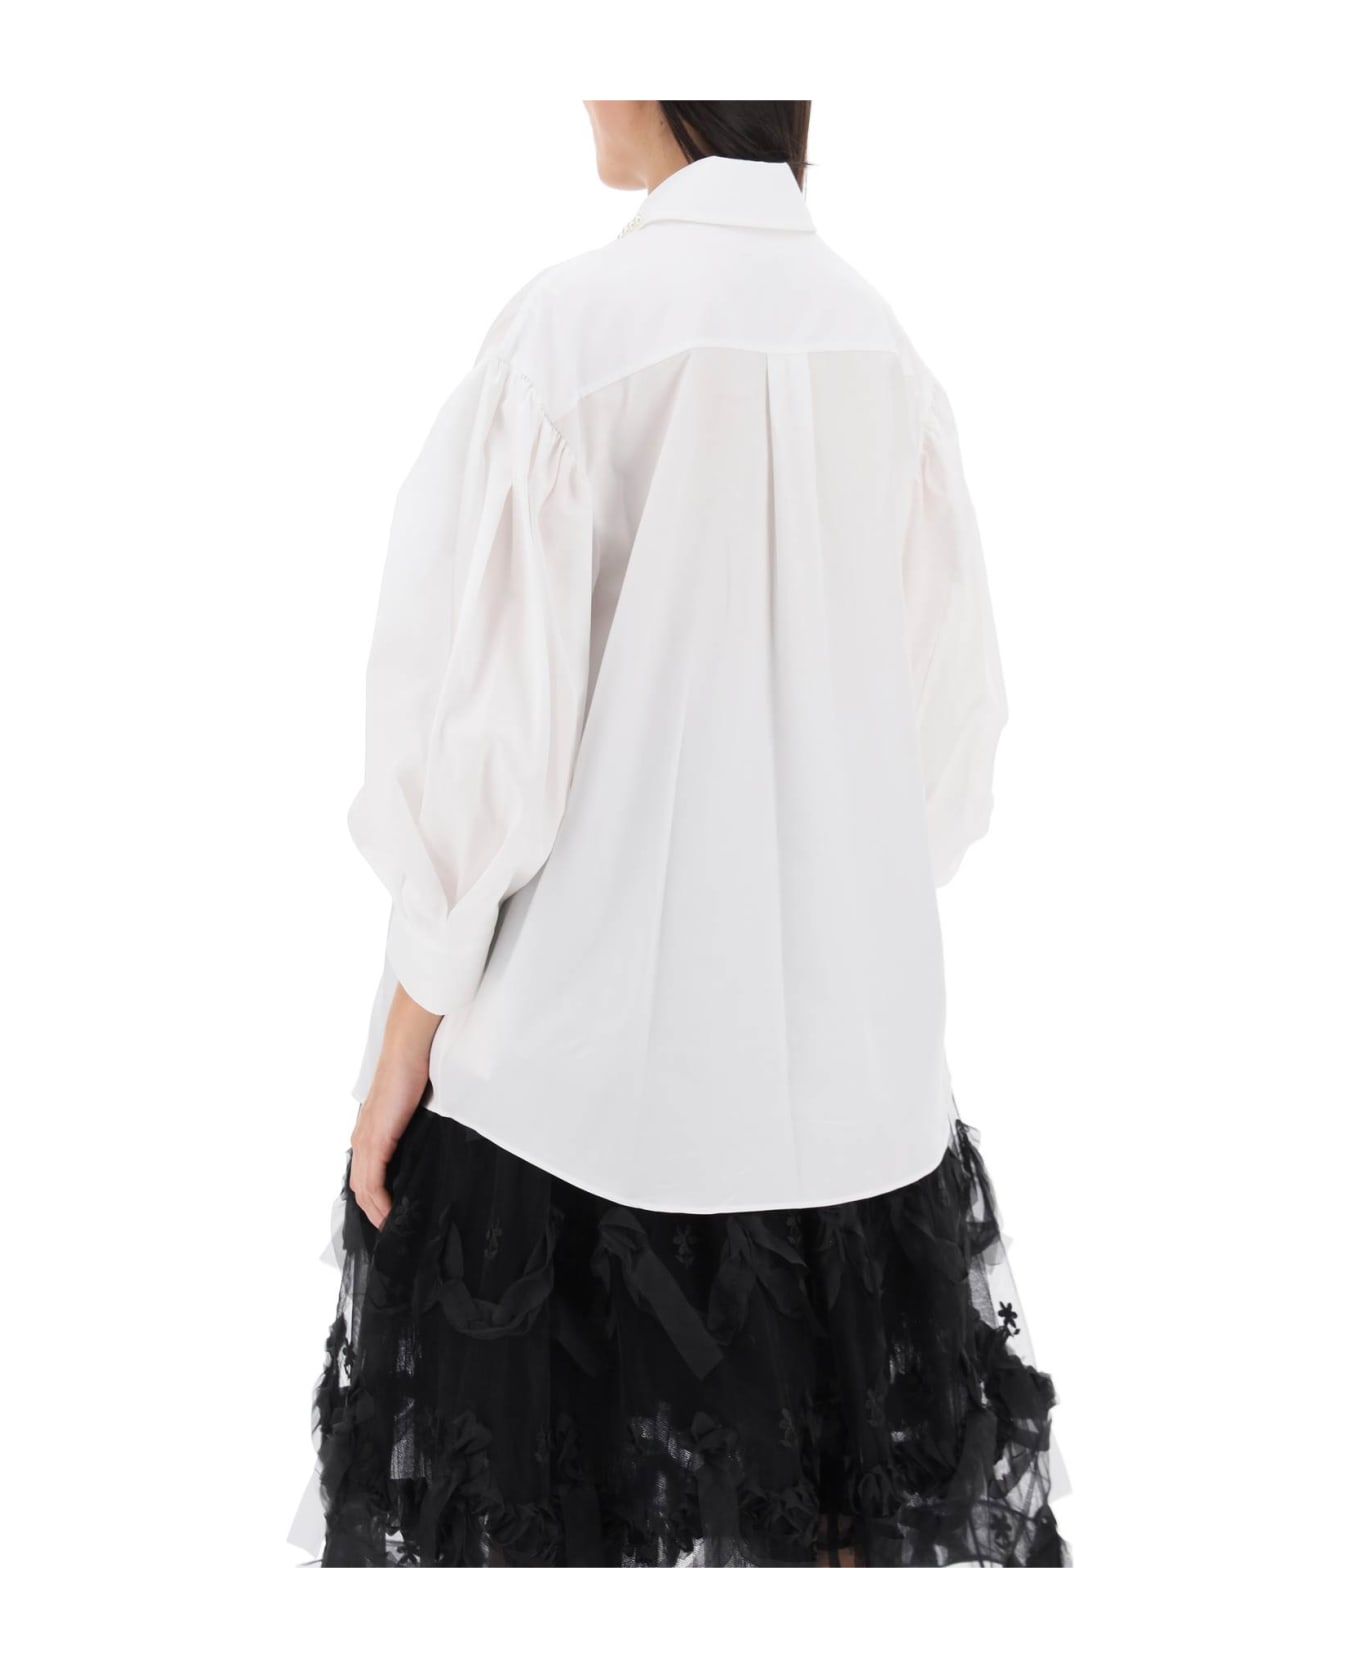 Simone Rocha Puff Sleeve Shirt With Embellishment - WHITE PEARL (White)